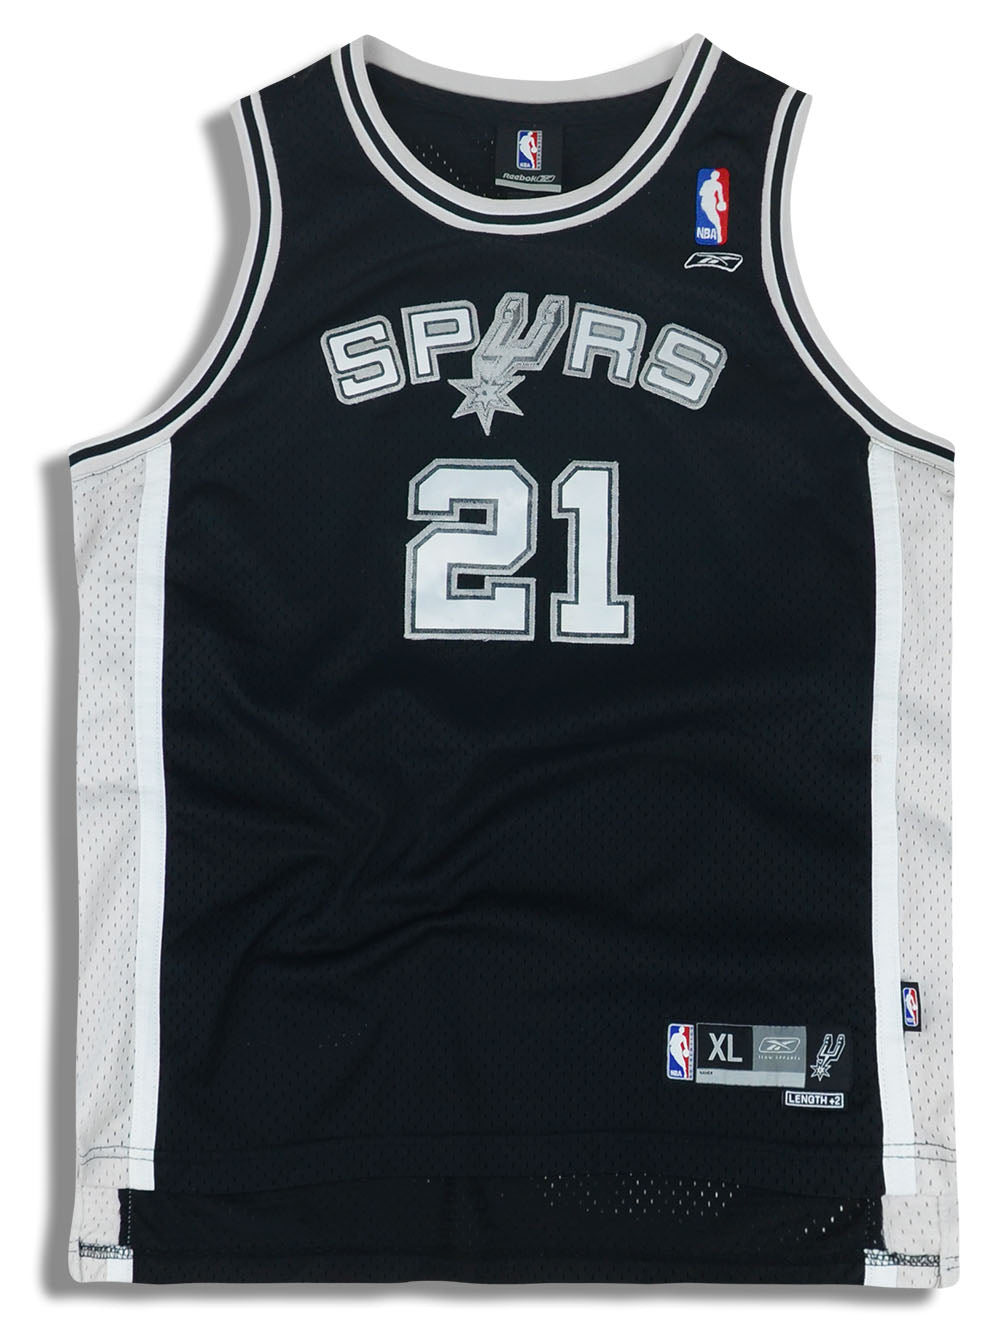 2005 San Antonio NBA Spurs Championship The Finals T-Shirt Reebok